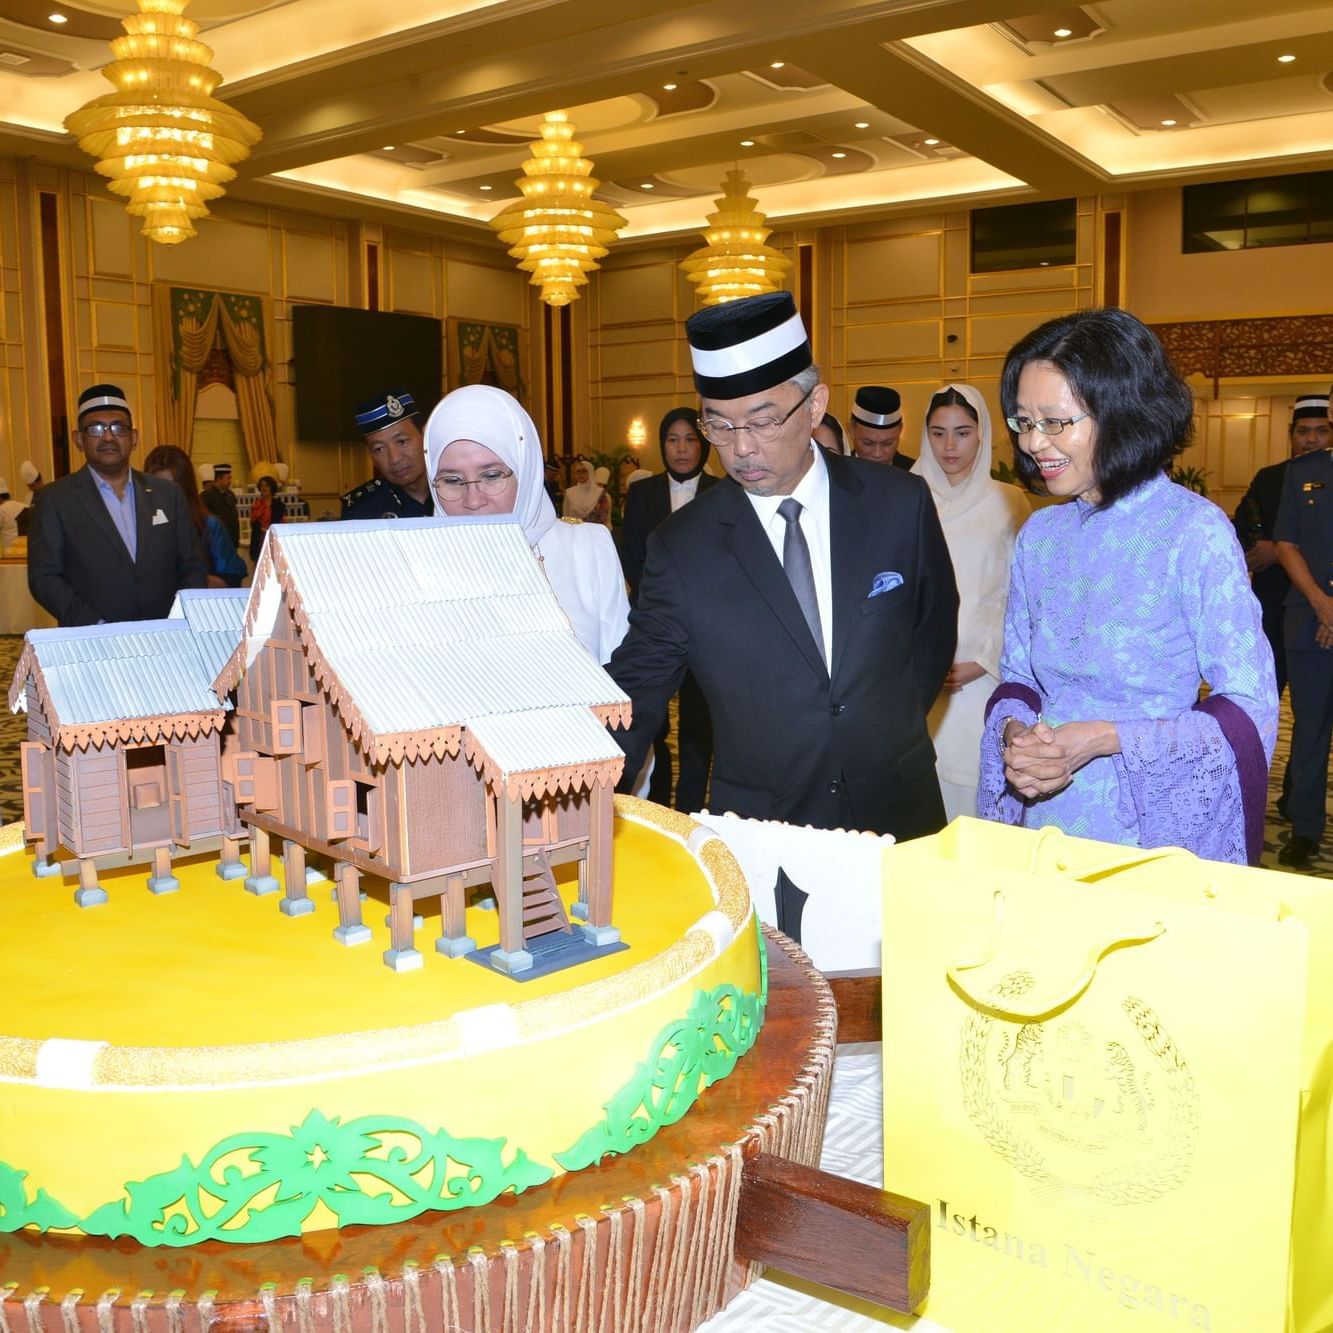 Cake presentation at The Federal Kuala Lumpur
